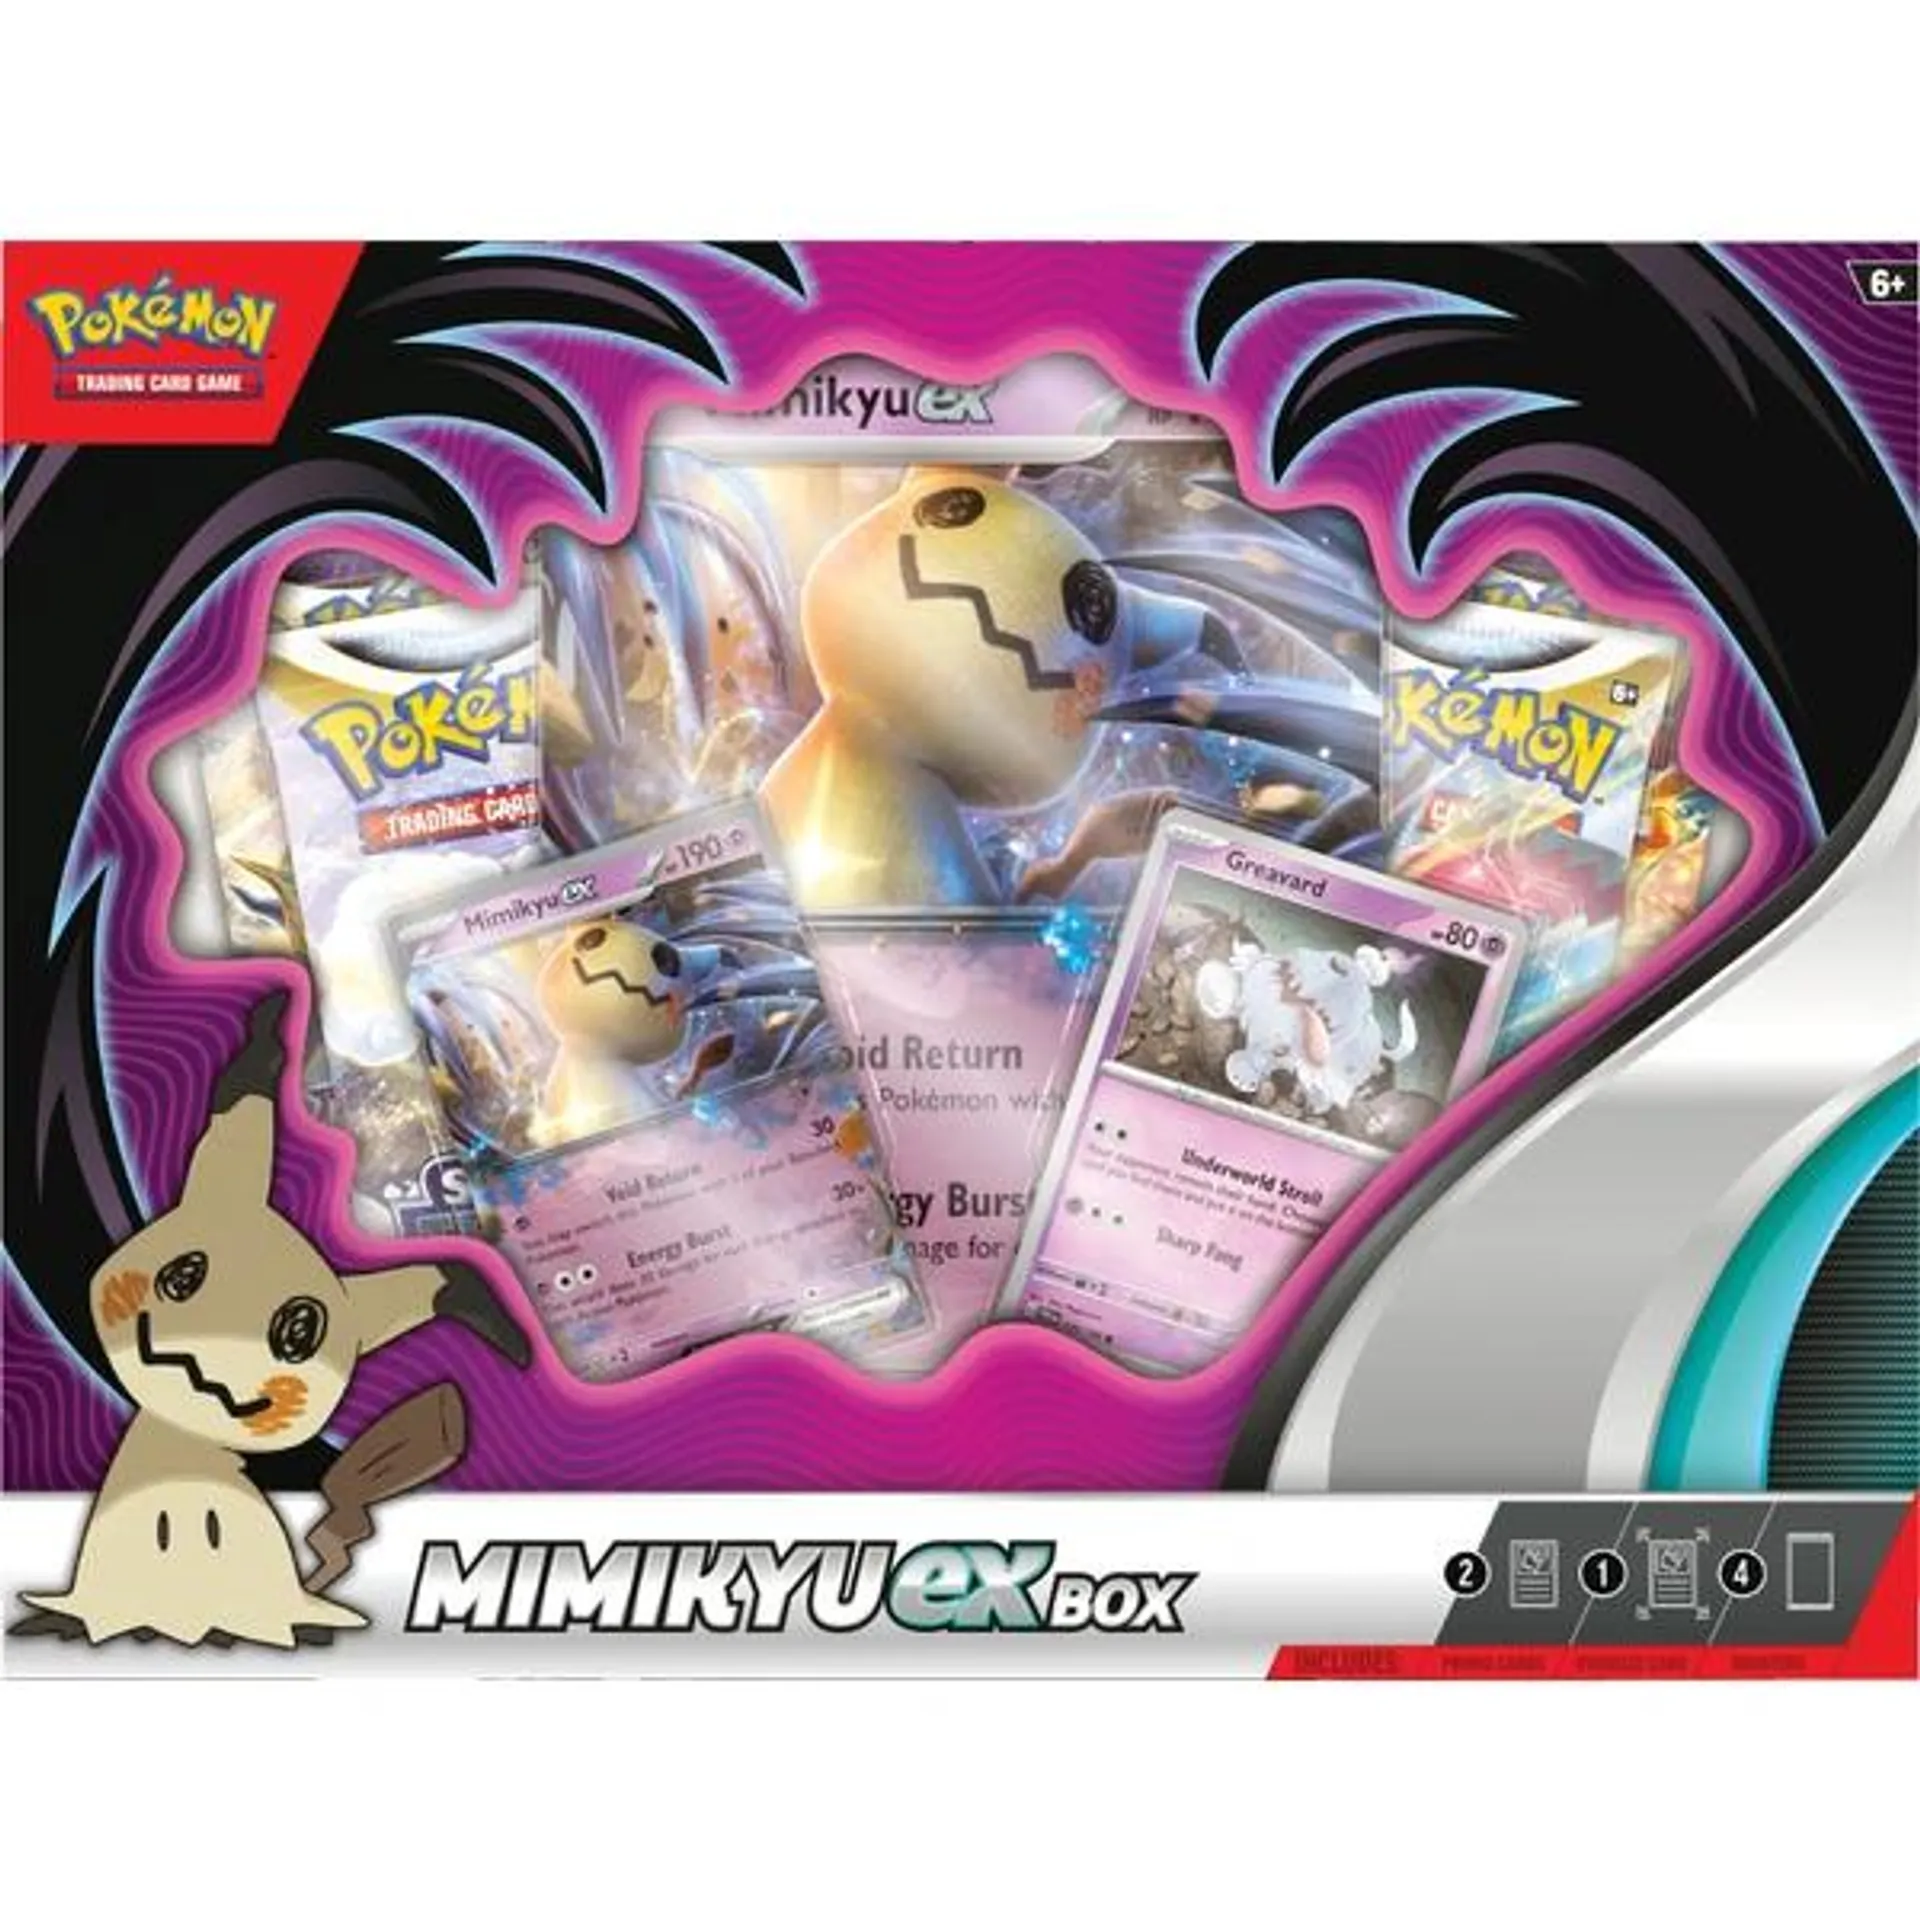 Pokémon Trading Card Game: Mimikyu Ex Box